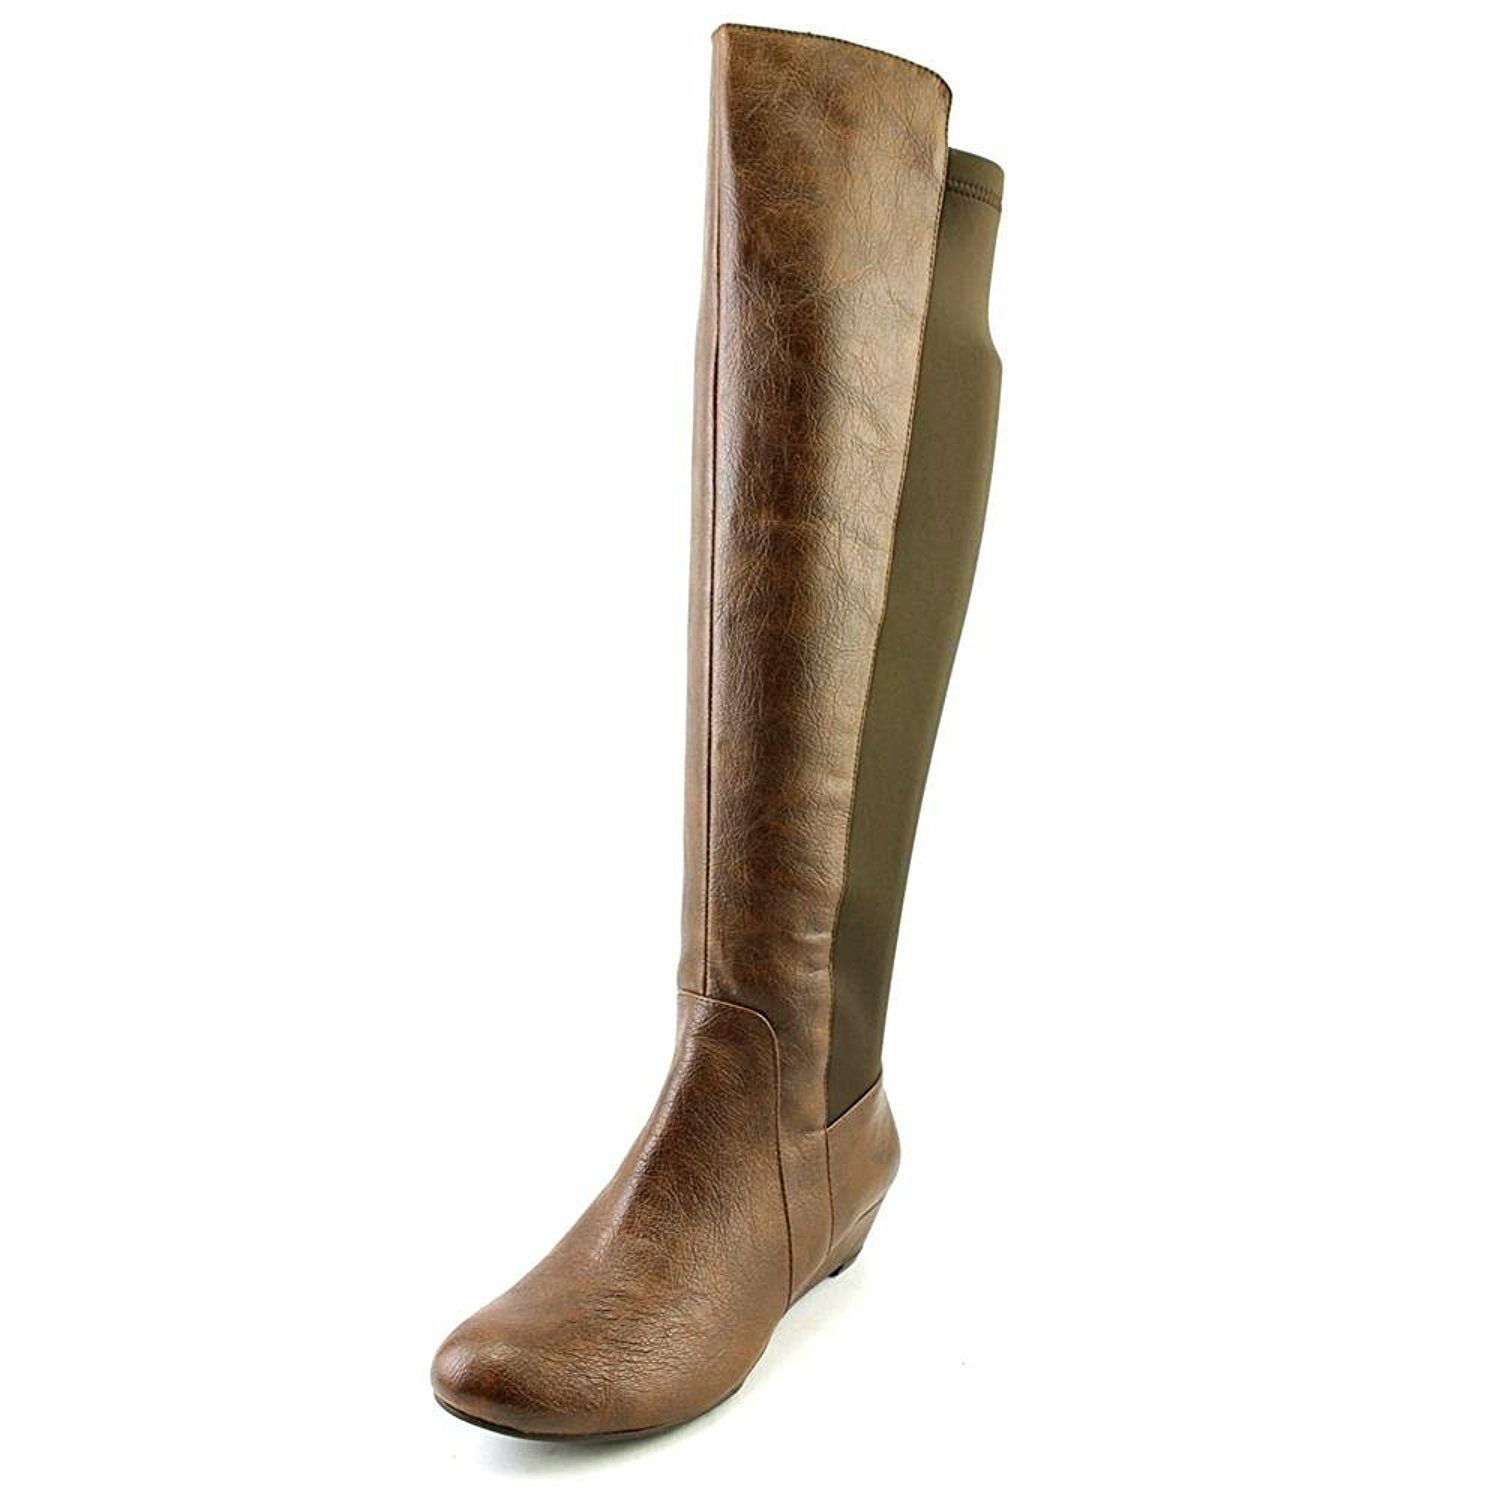 Jessica Simpson Womens Joline Almond Toe Knee High Fashion Boots | eBay